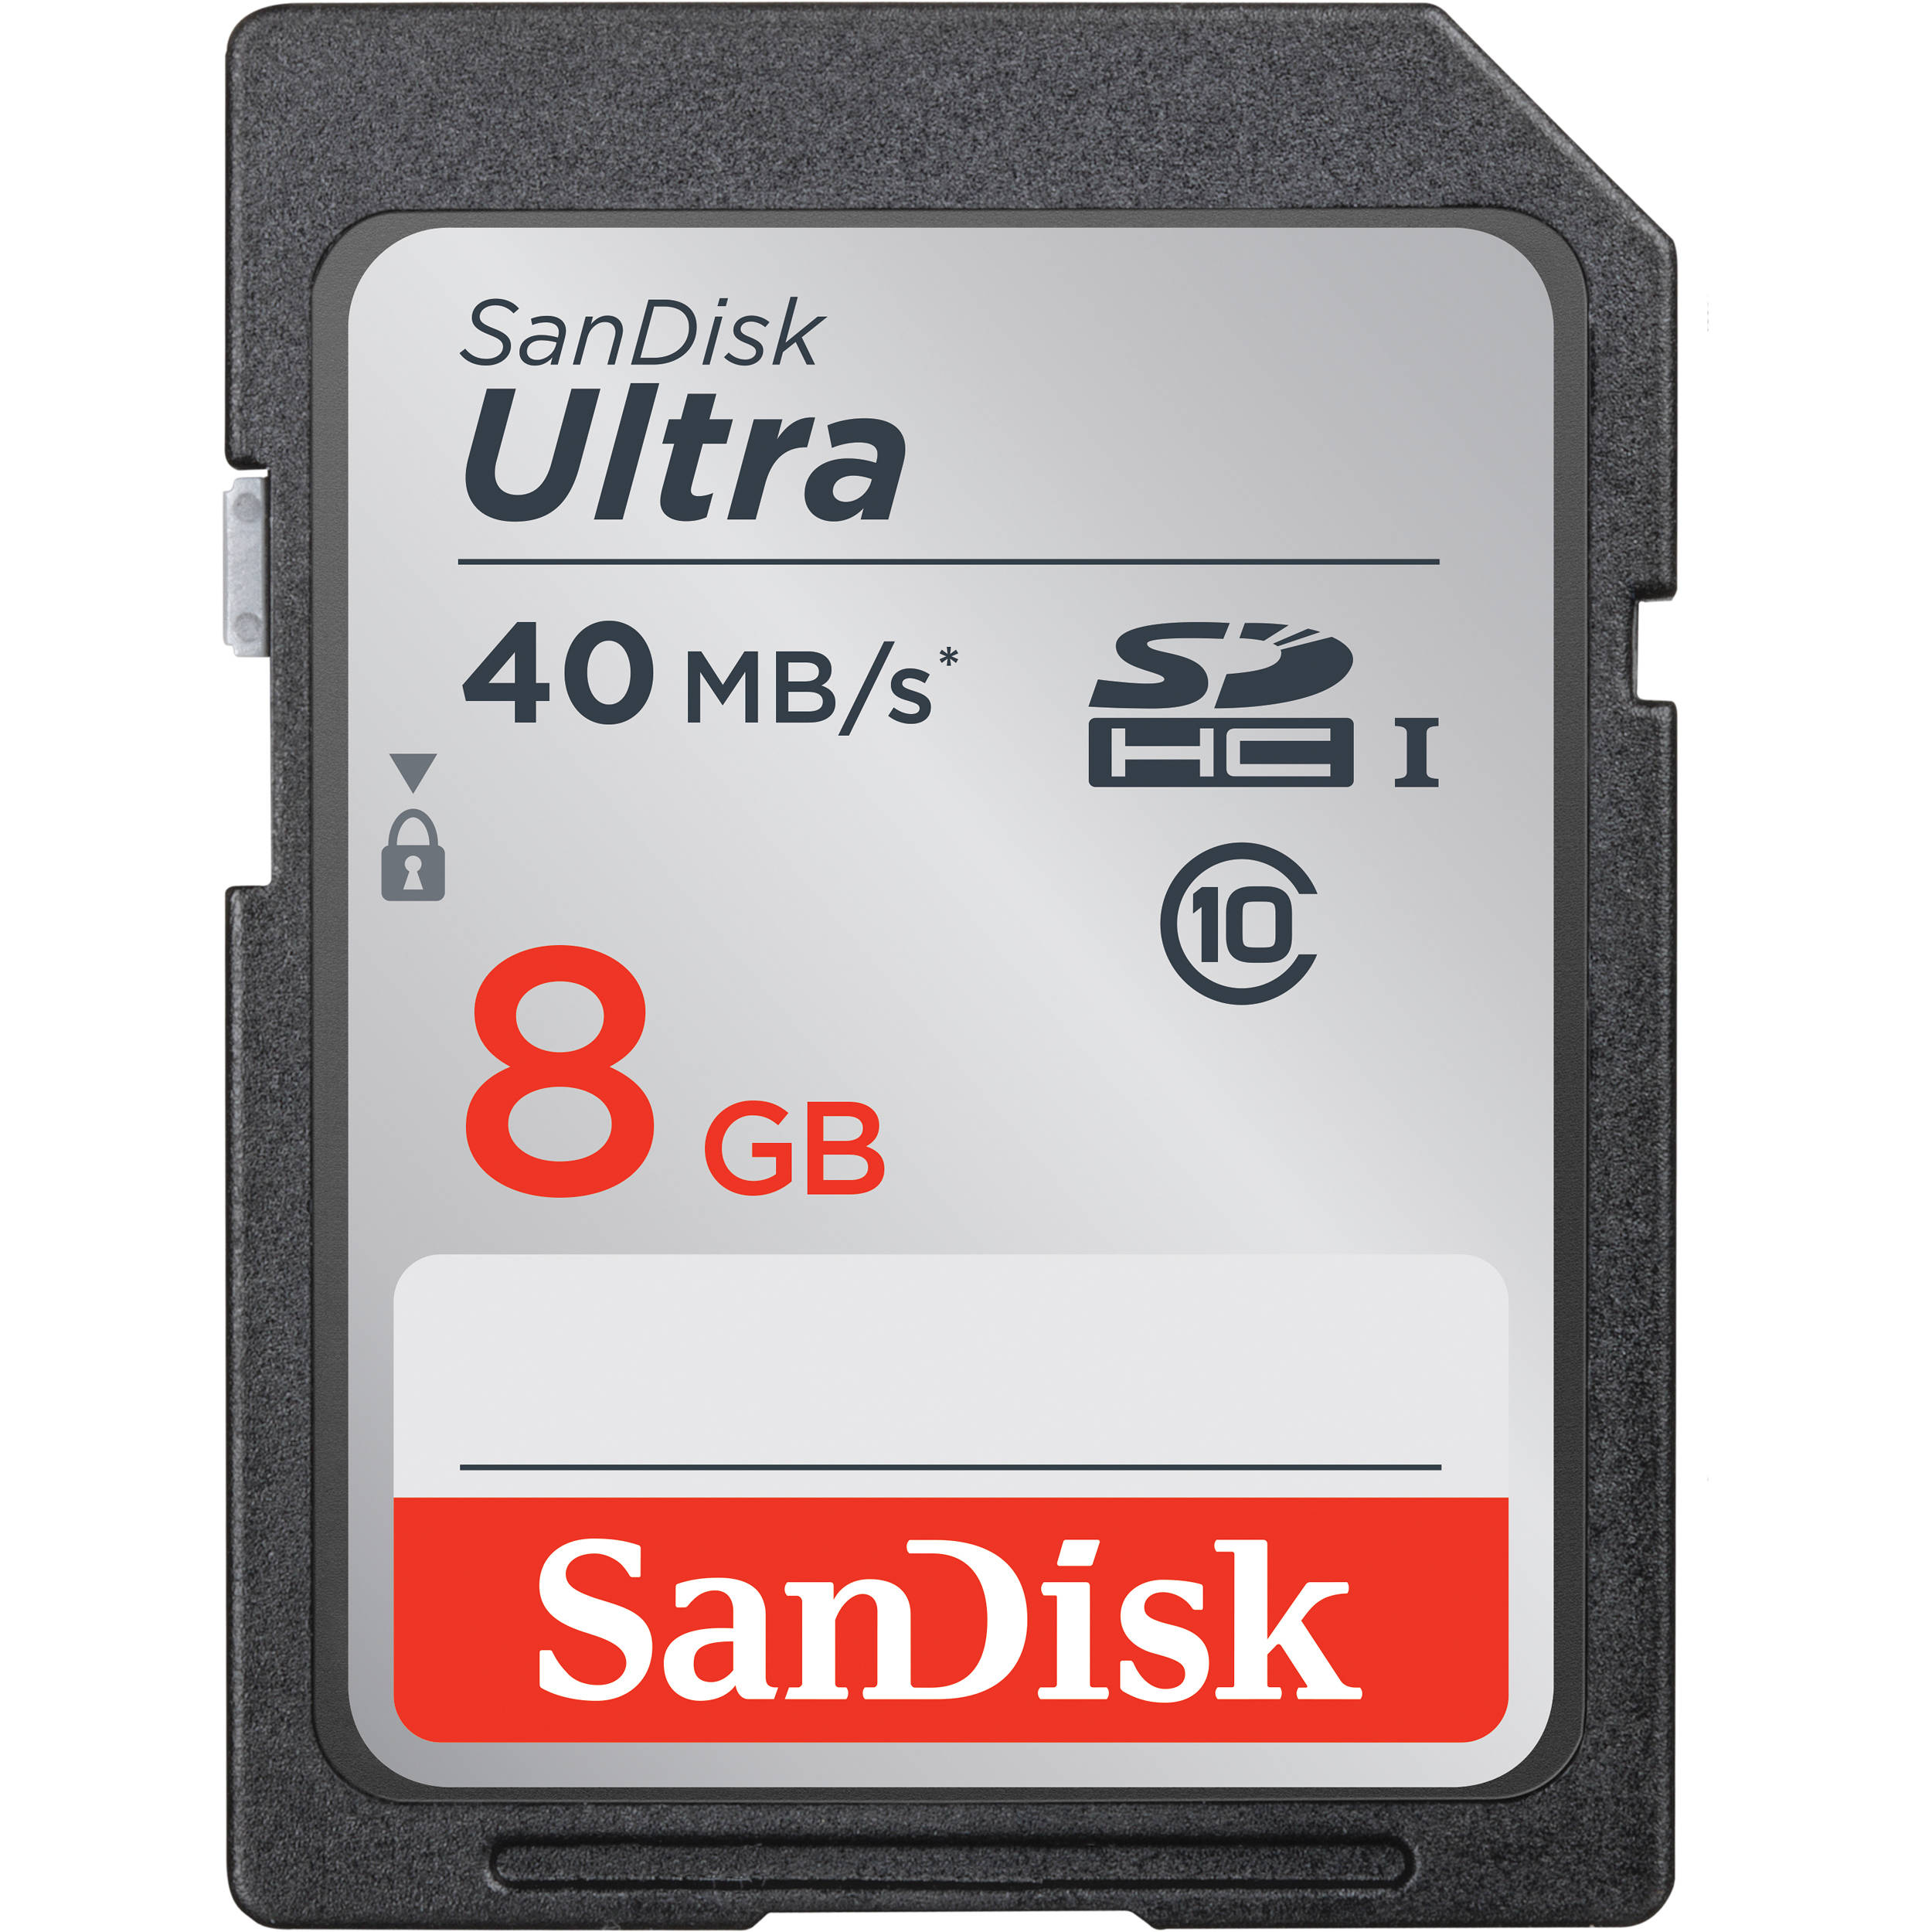 SanDisk SD 8GB Ultra 40 mbs